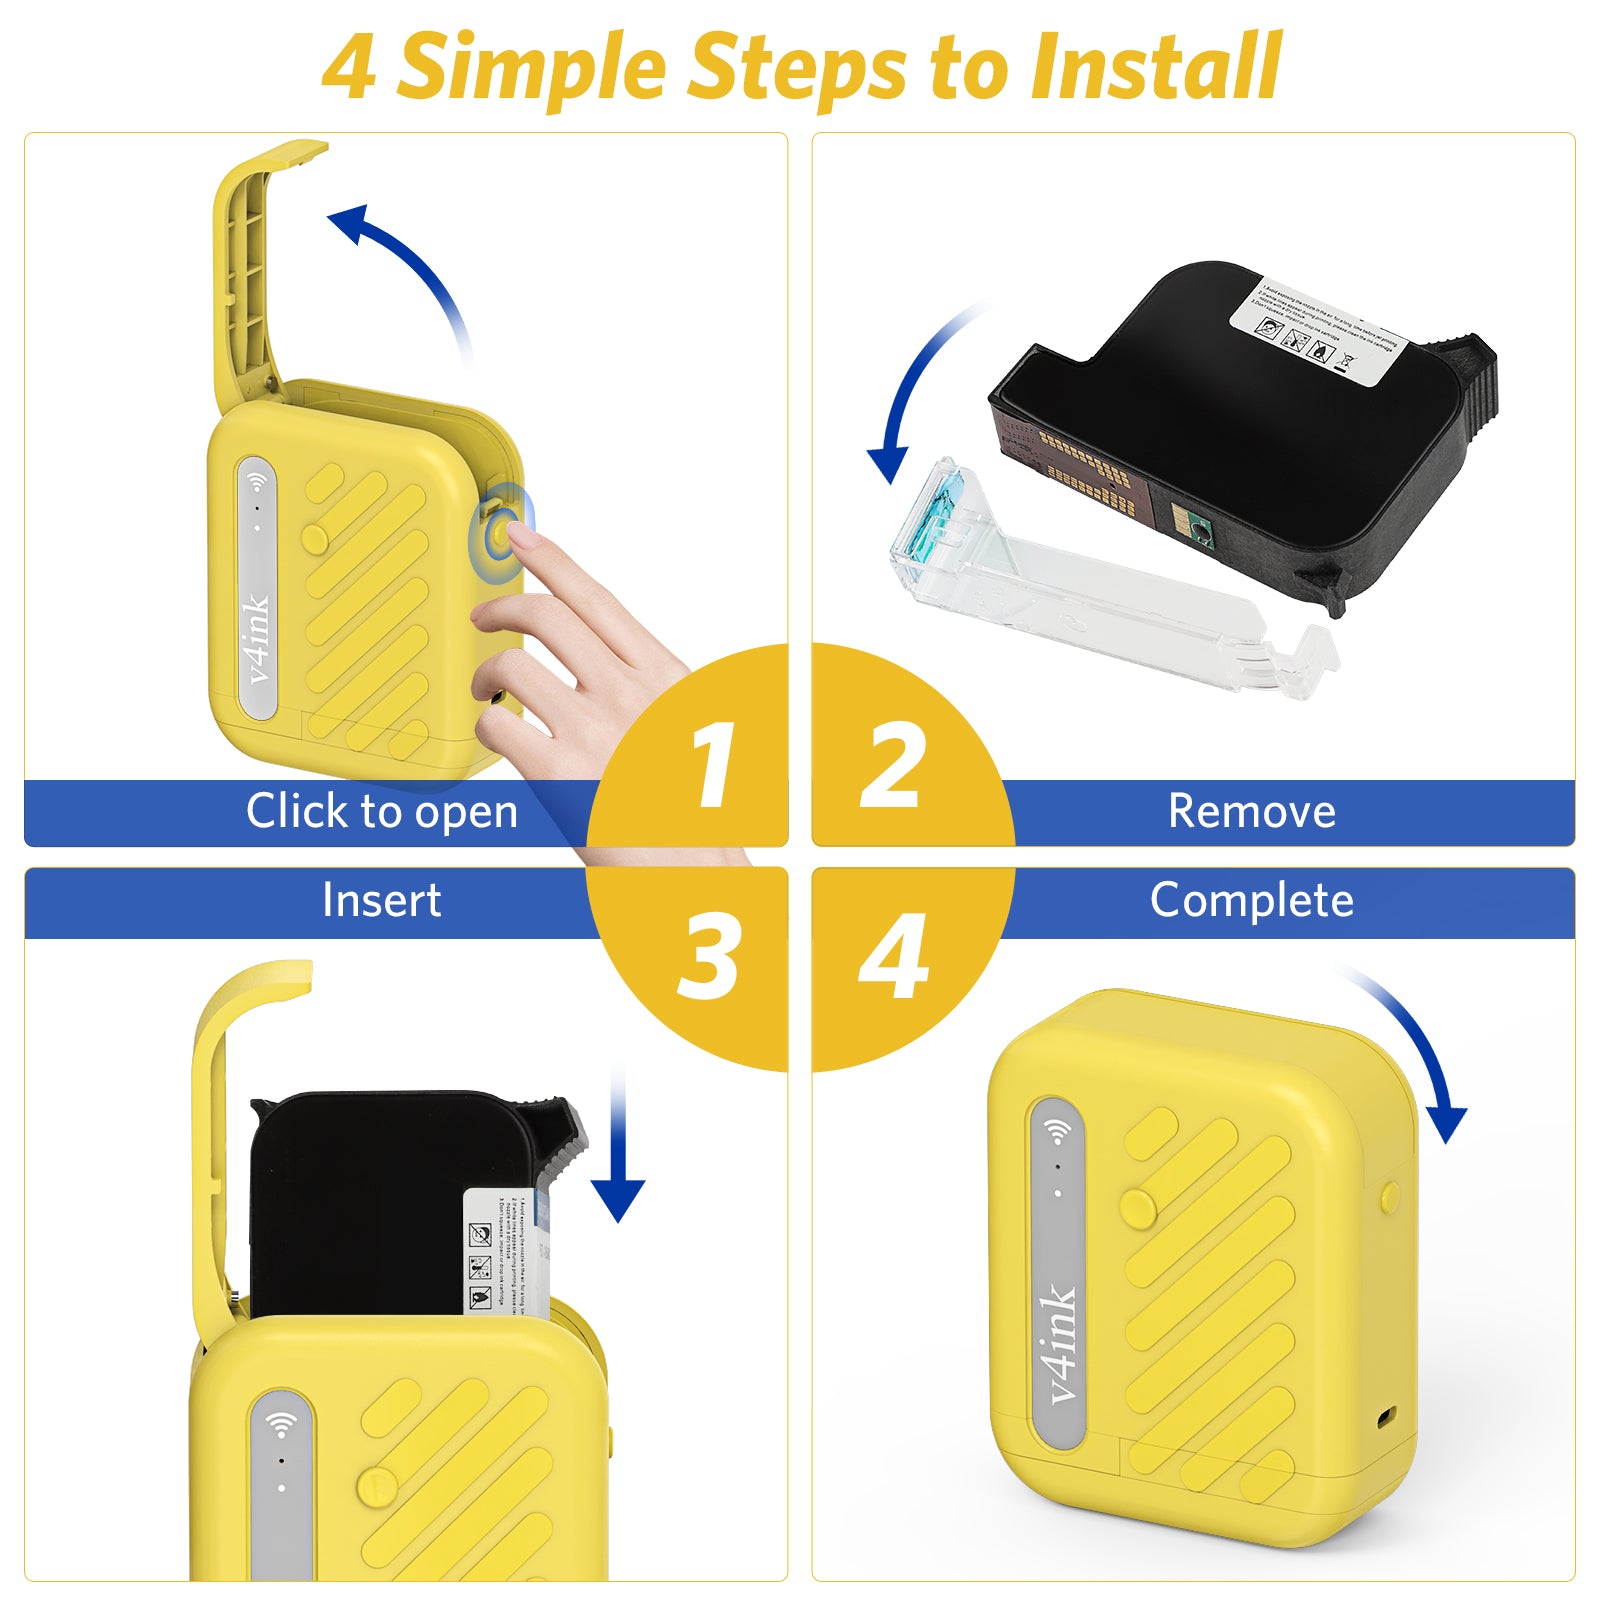 Easy installation guide for V4INK BENTSAI B10 Mini printer